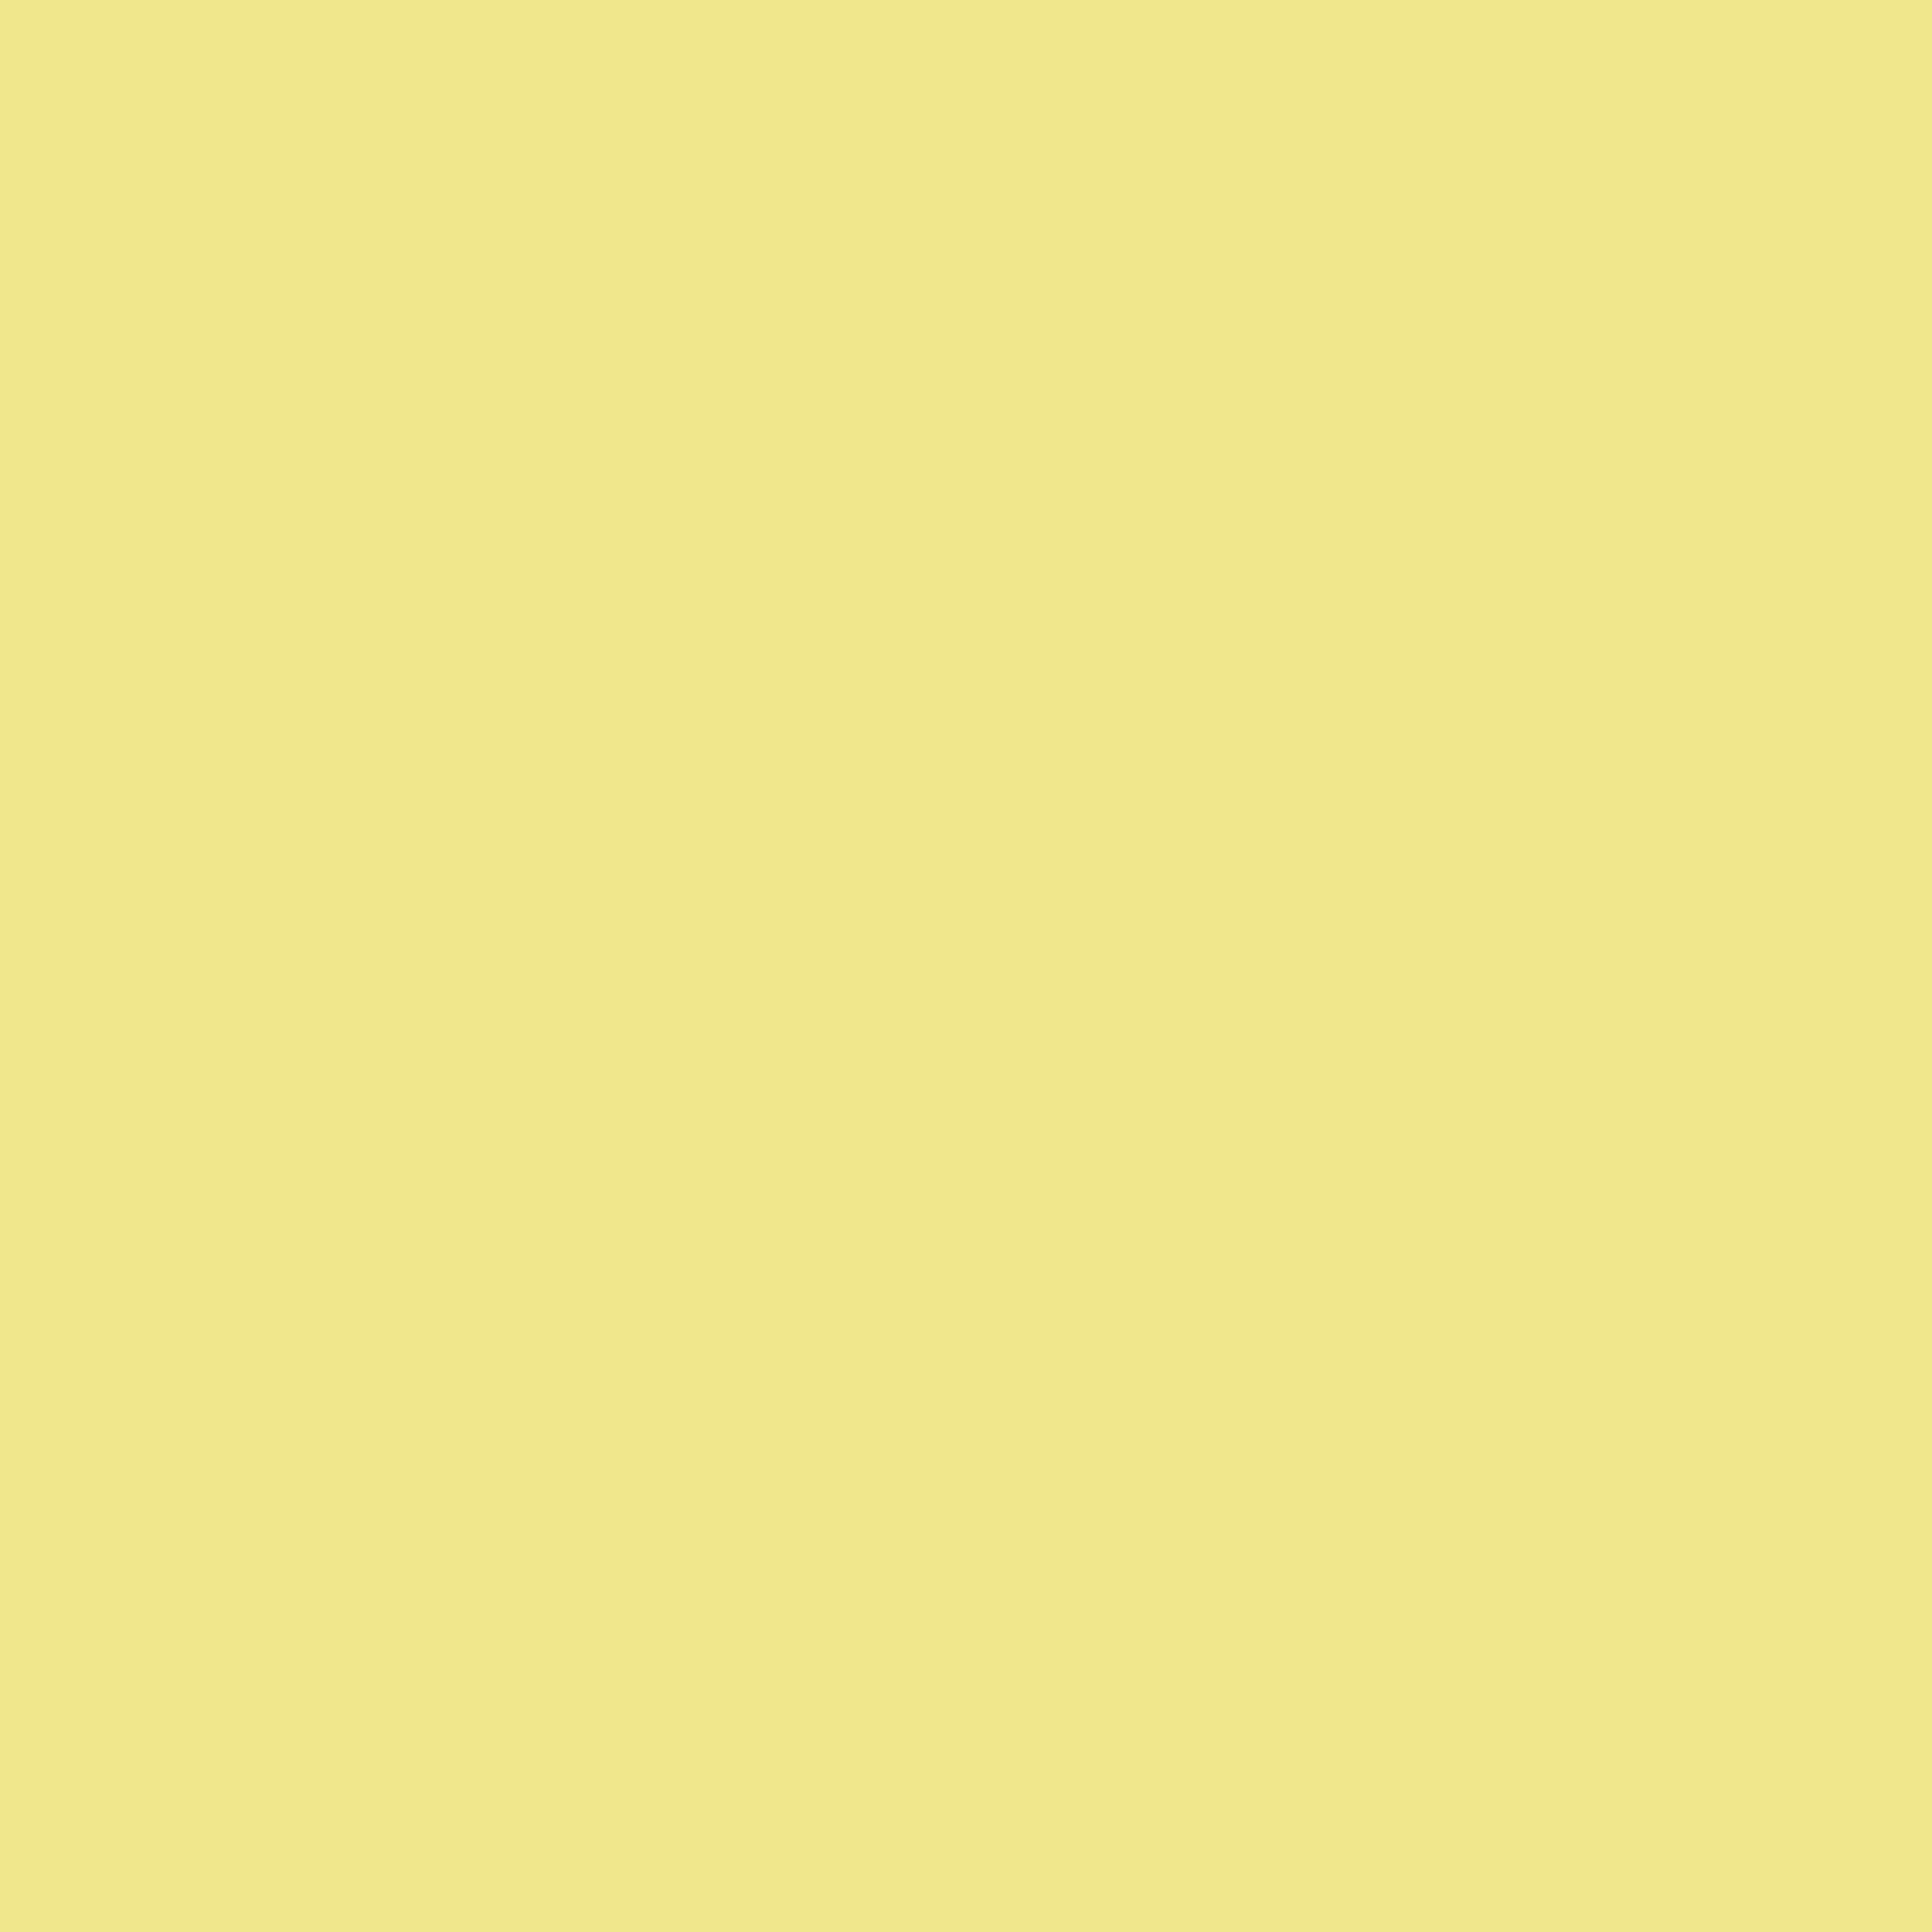 2732x2732 Khaki X11 Gui Light Khaki Solid Color Background